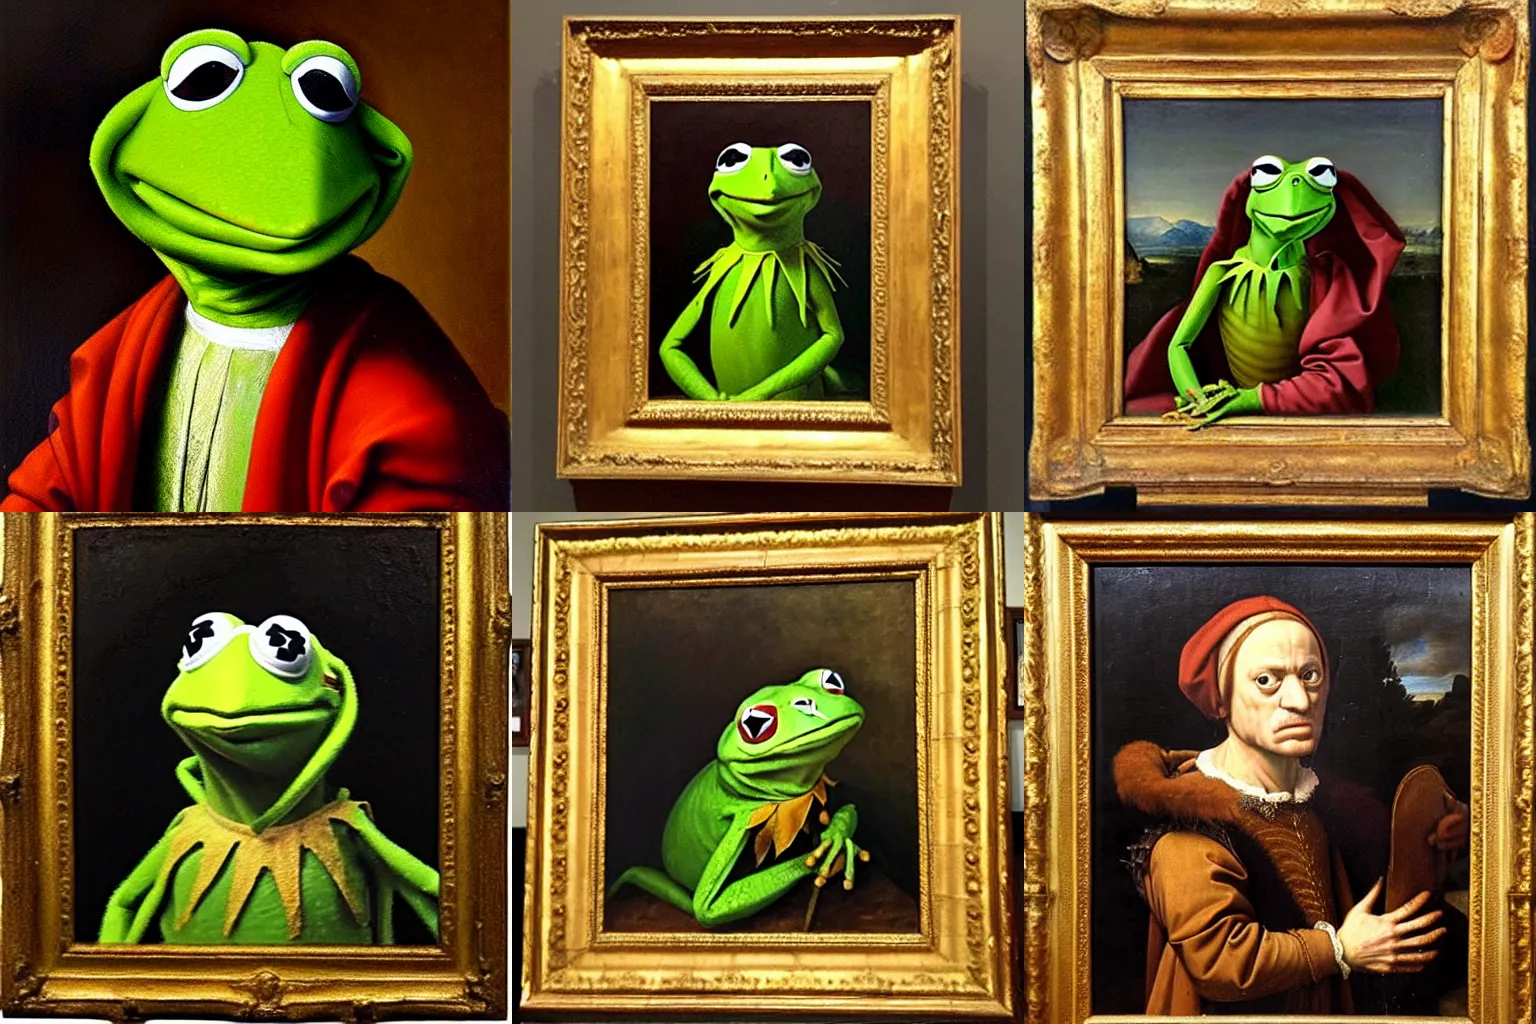 Prompt: renaissance masterpiece portrait of kermit the frog, old flemish masters, oil painting, museum centerpiece